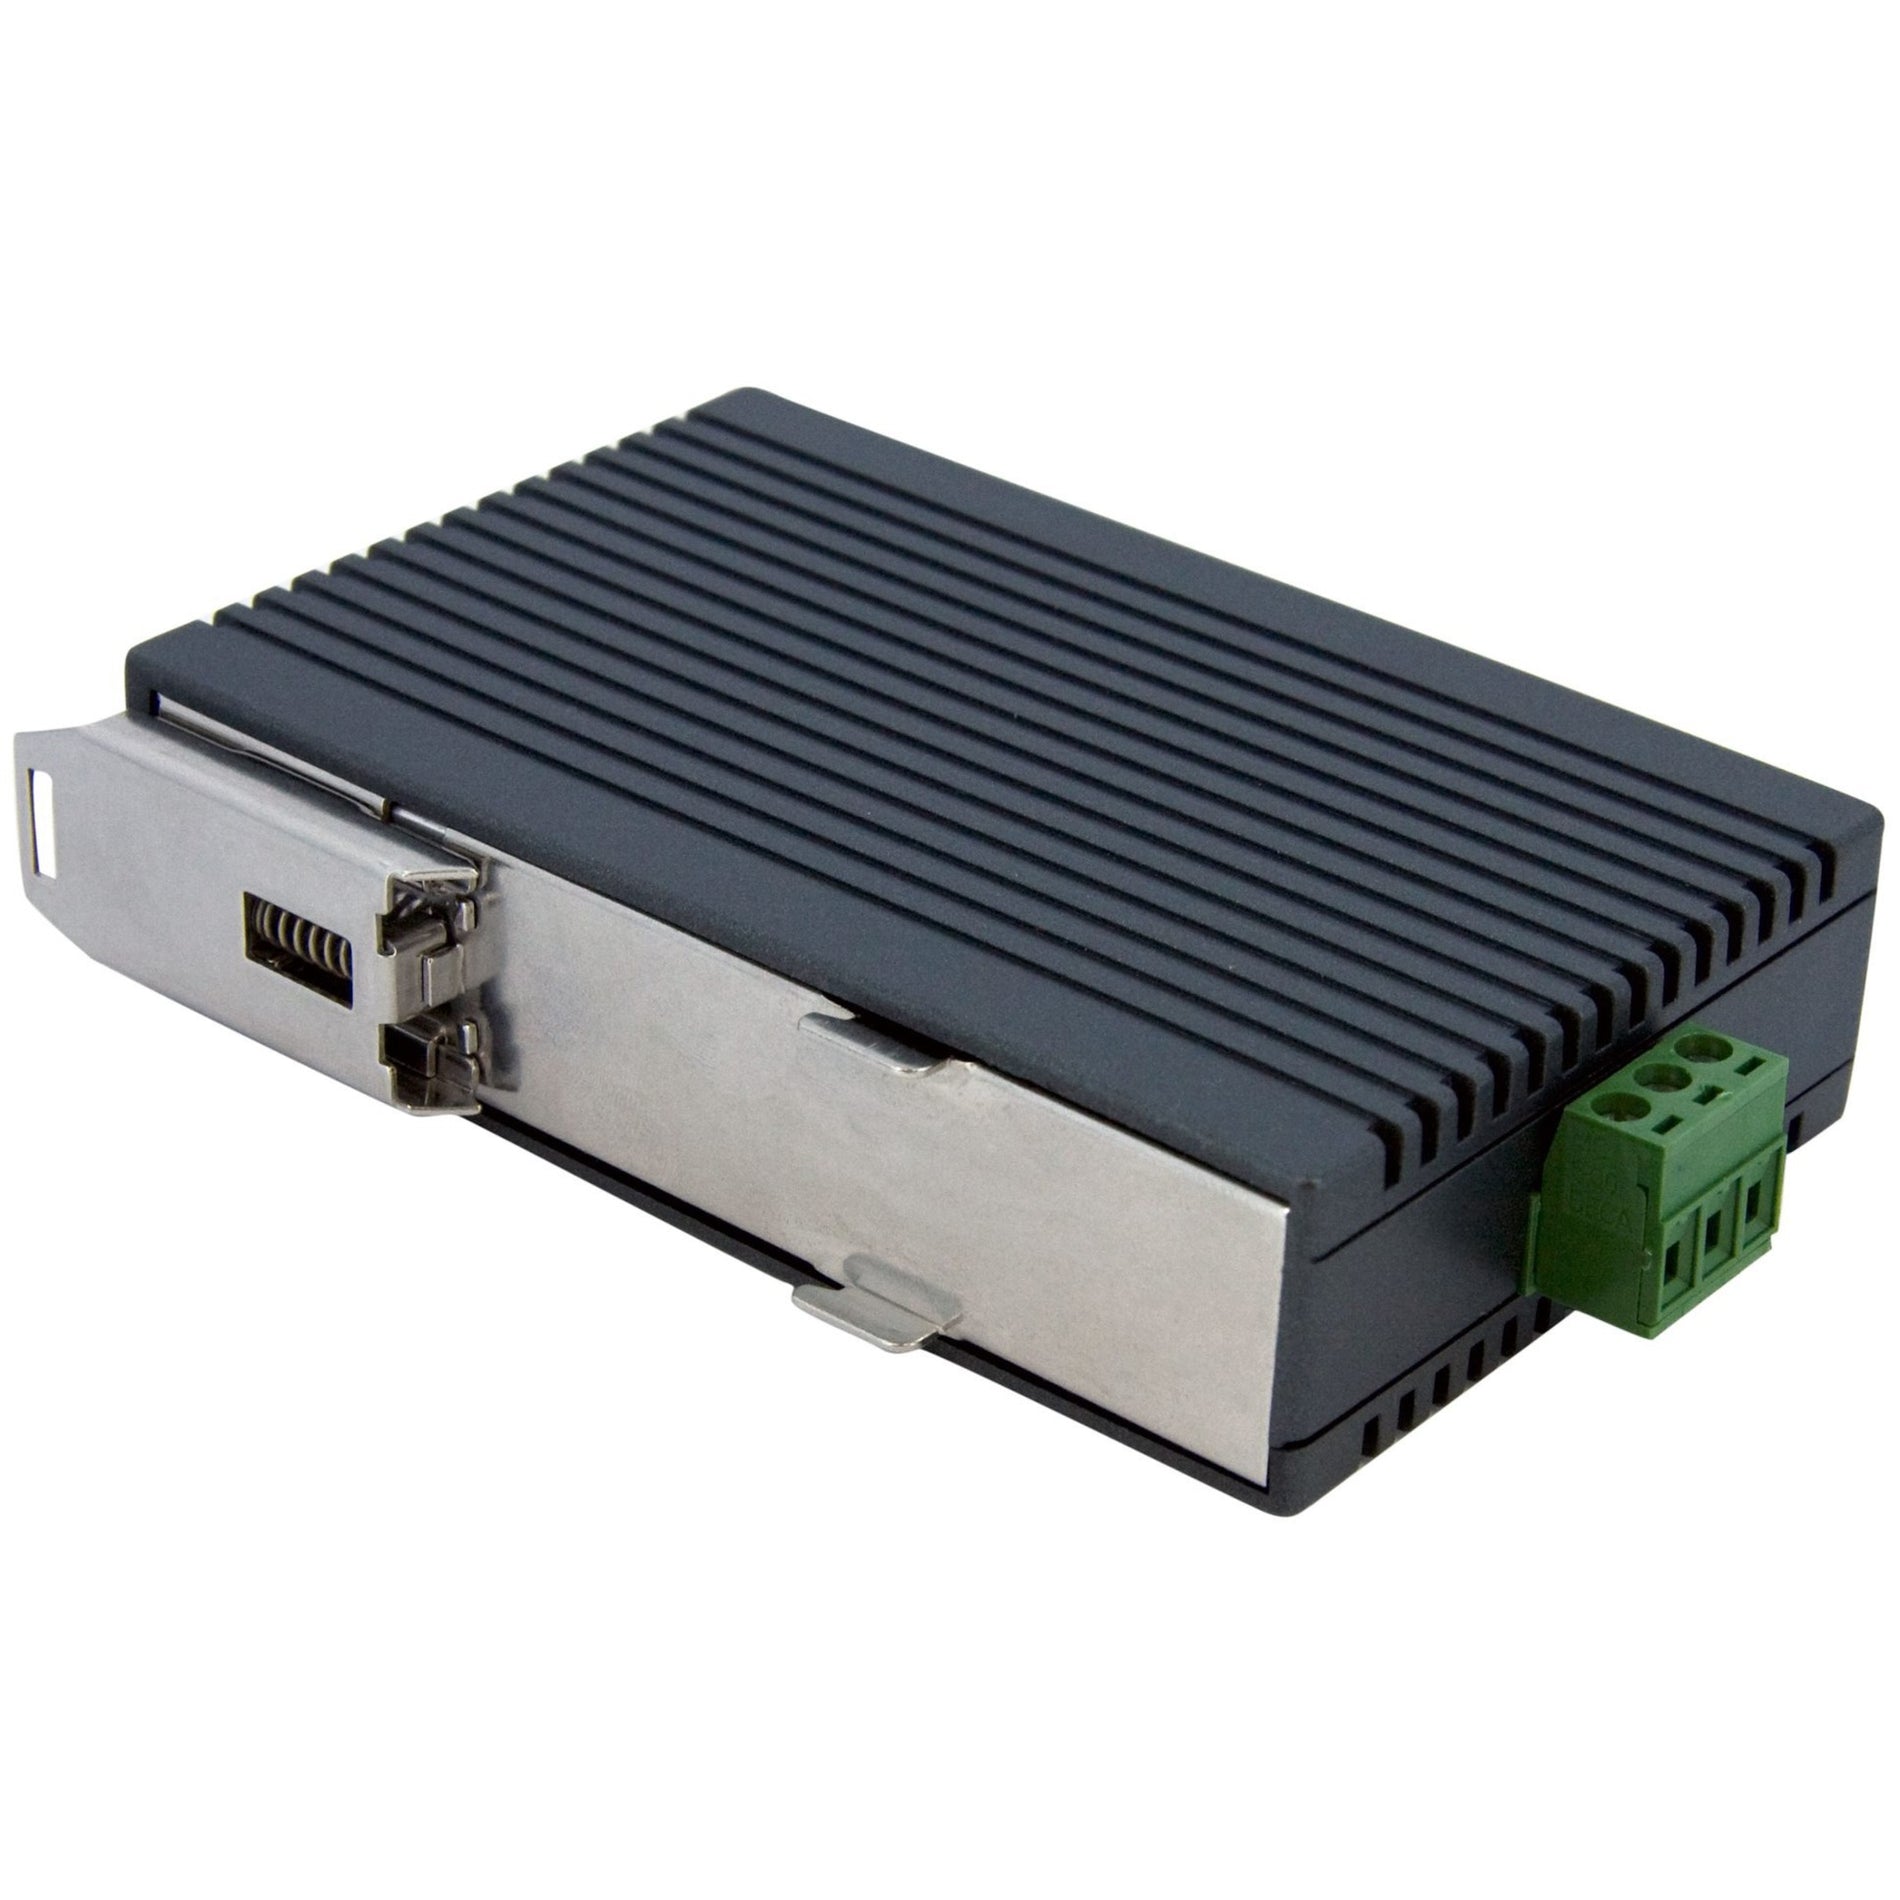 StarTech.com 5 Port Industrial Ethernet Switch - DIN Rail Mountable (IES5102)